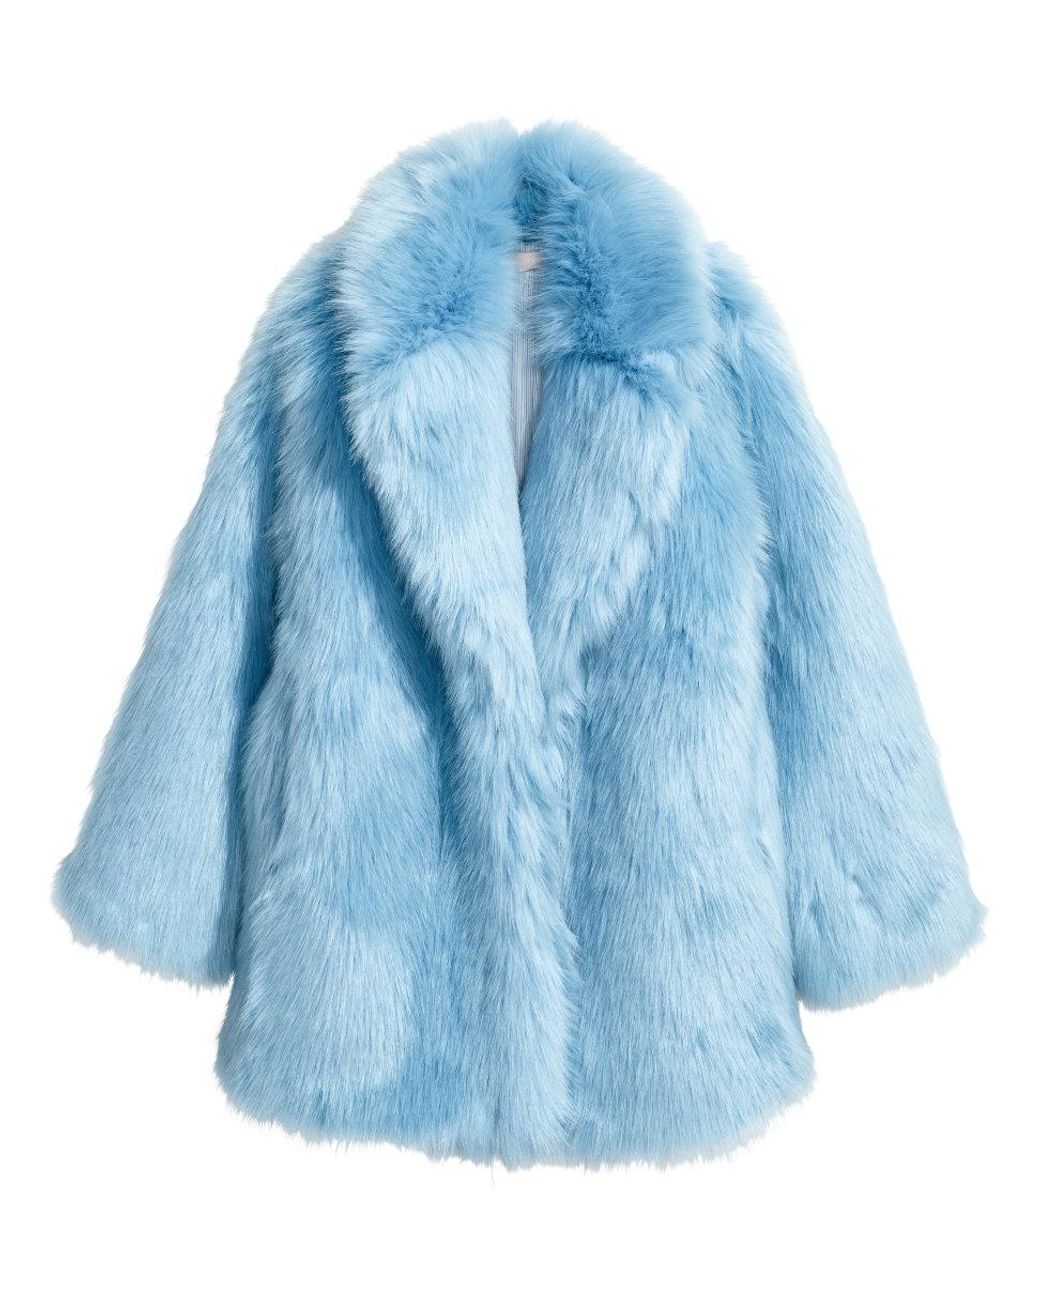 Mens Blue Faux Fur Coat | vlr.eng.br